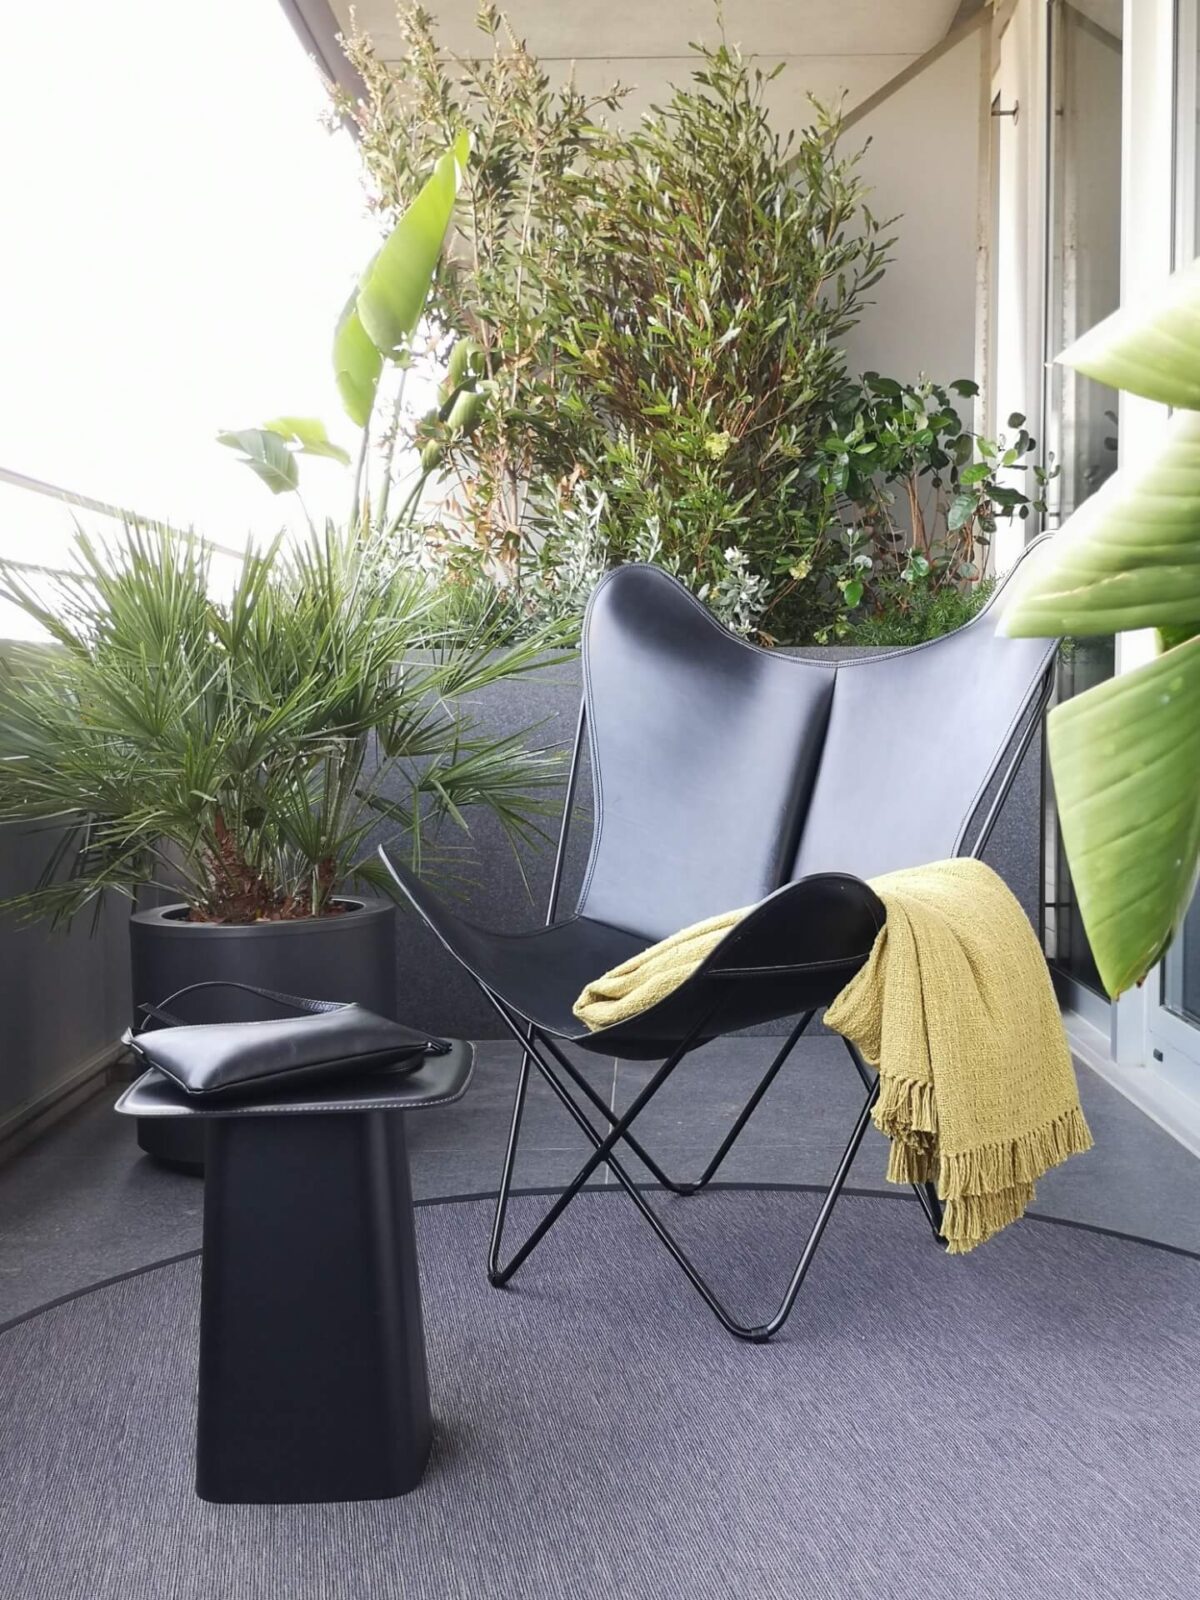 Reforma de Apartamento Moderno Llull por YLAB Arquitectos - Sacada com plantas e poltrona butterfly